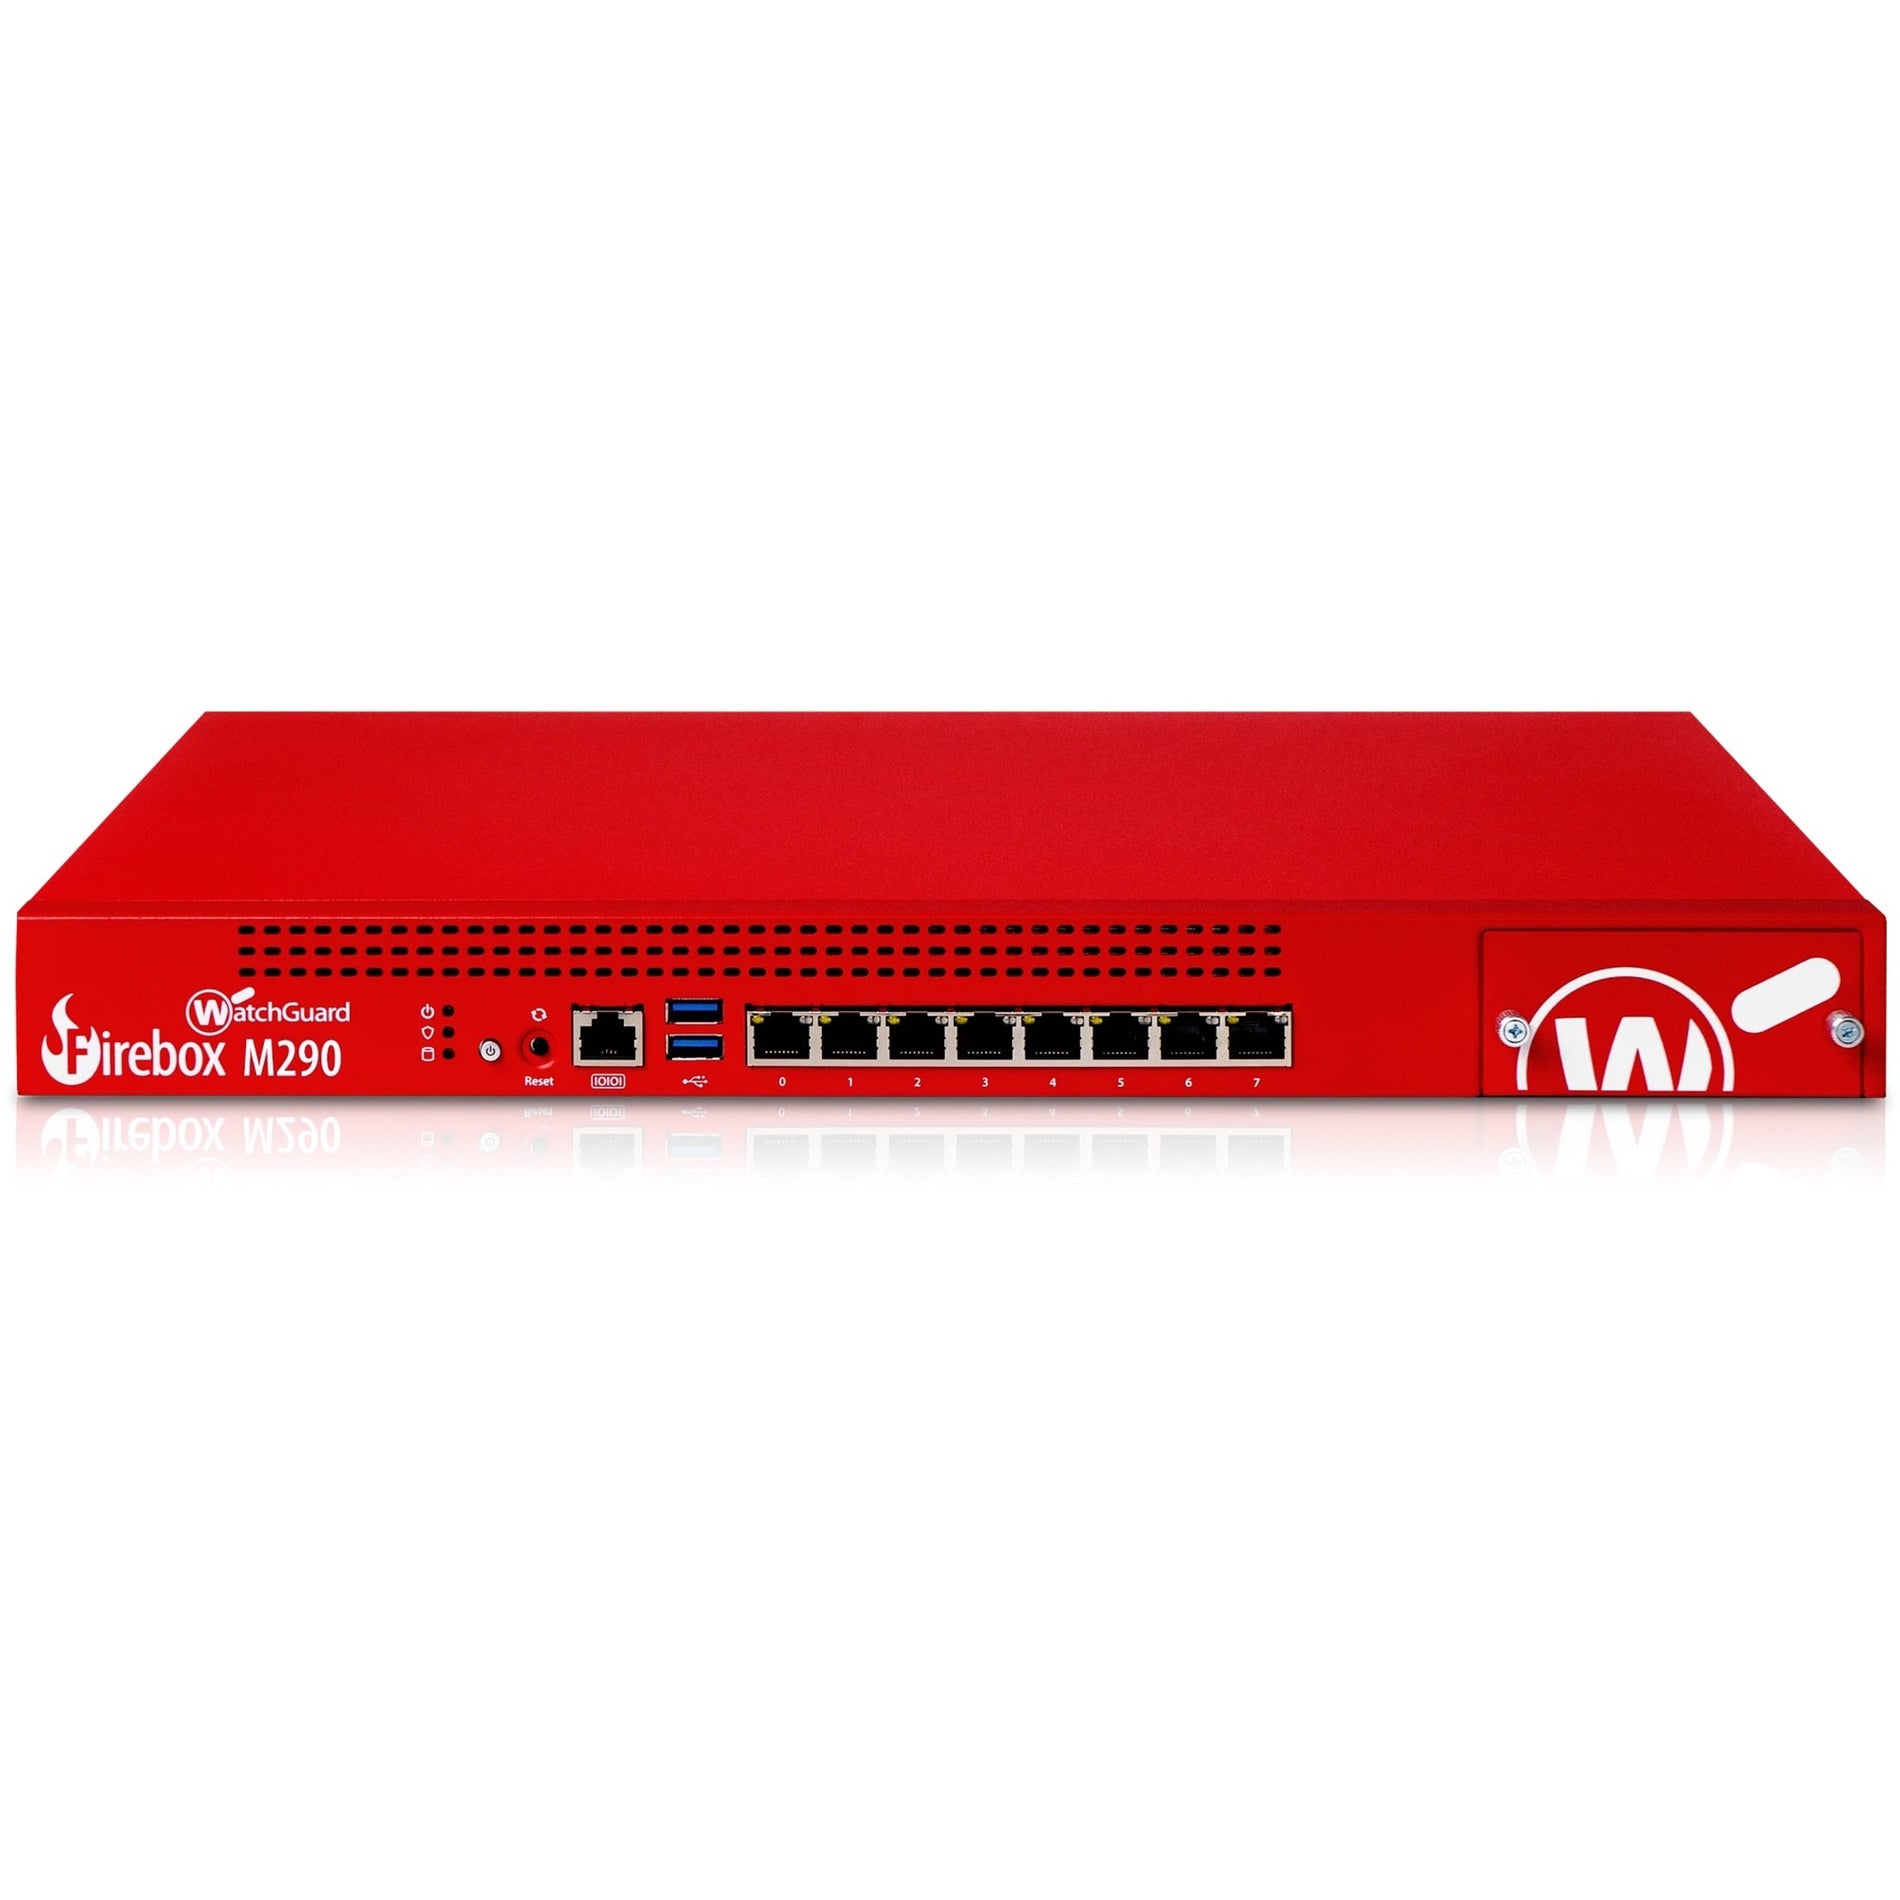 WatchGuard WGM29001603 Firebox M290 High Availability Firewall, 8 Ports, Gigabit Ethernet, Malware Protection, VPN Connectivity